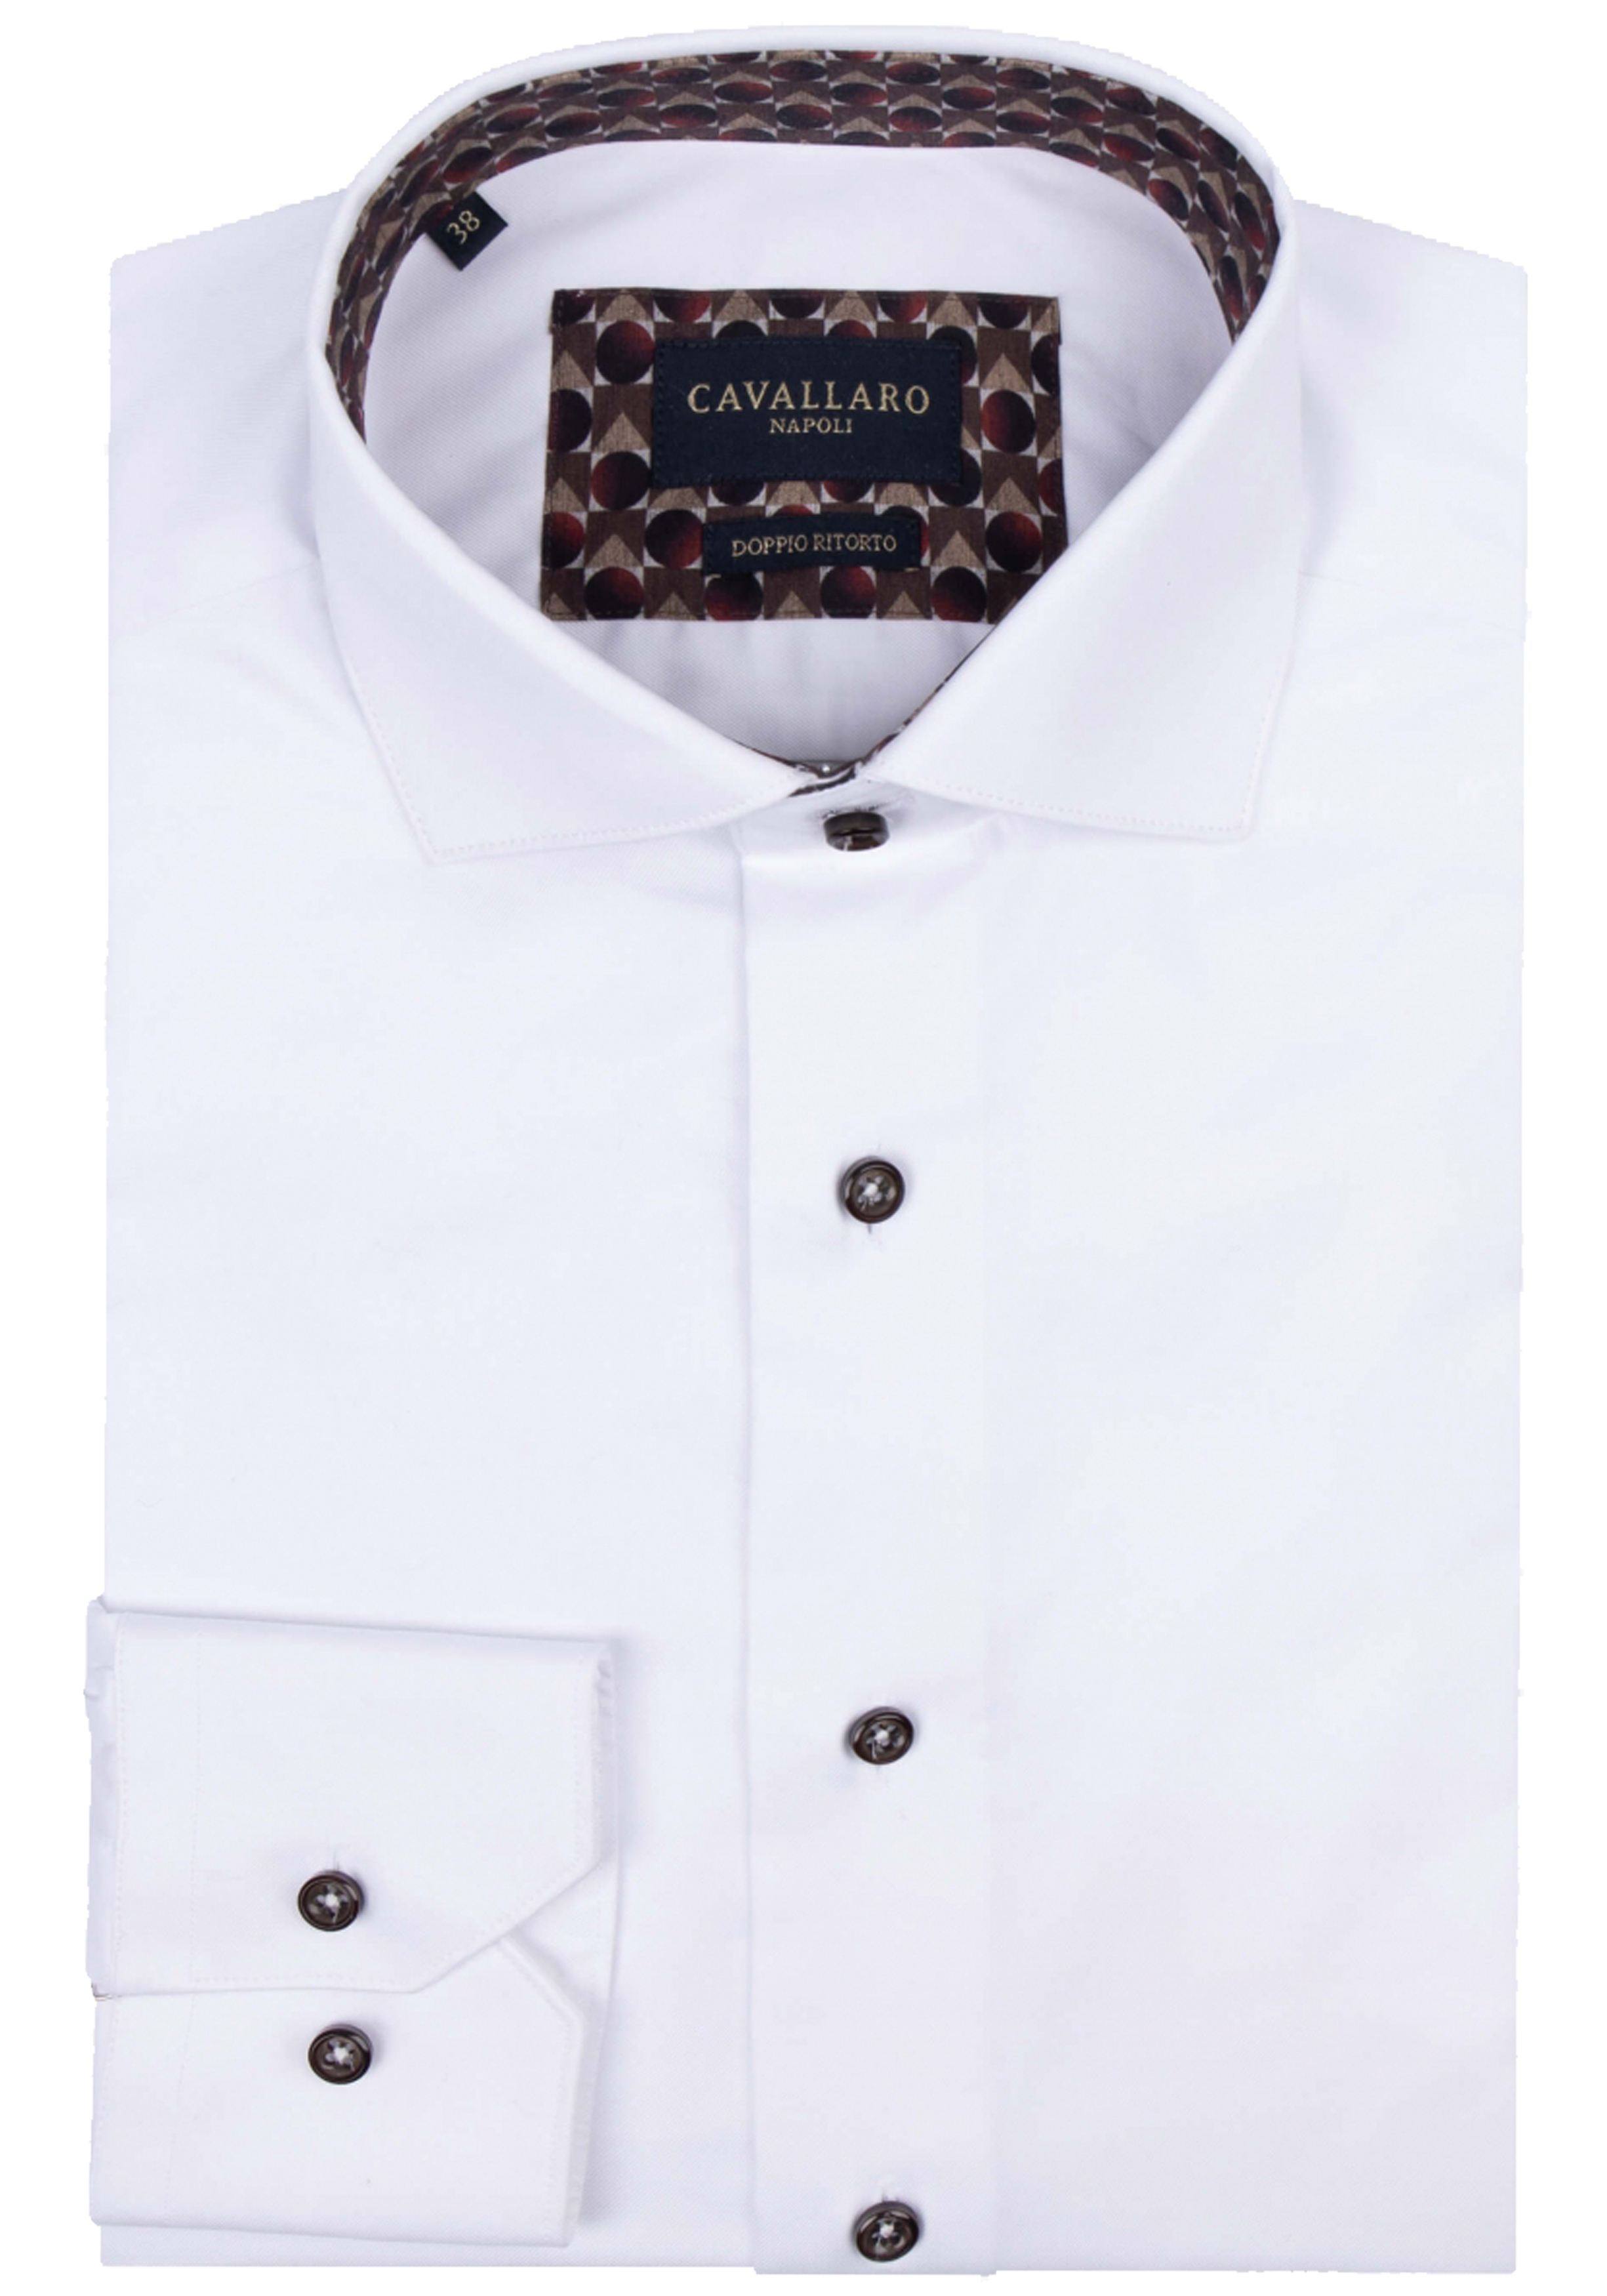 Cavallaro Napoli Faustuo slim fit overhemd, twill, wit